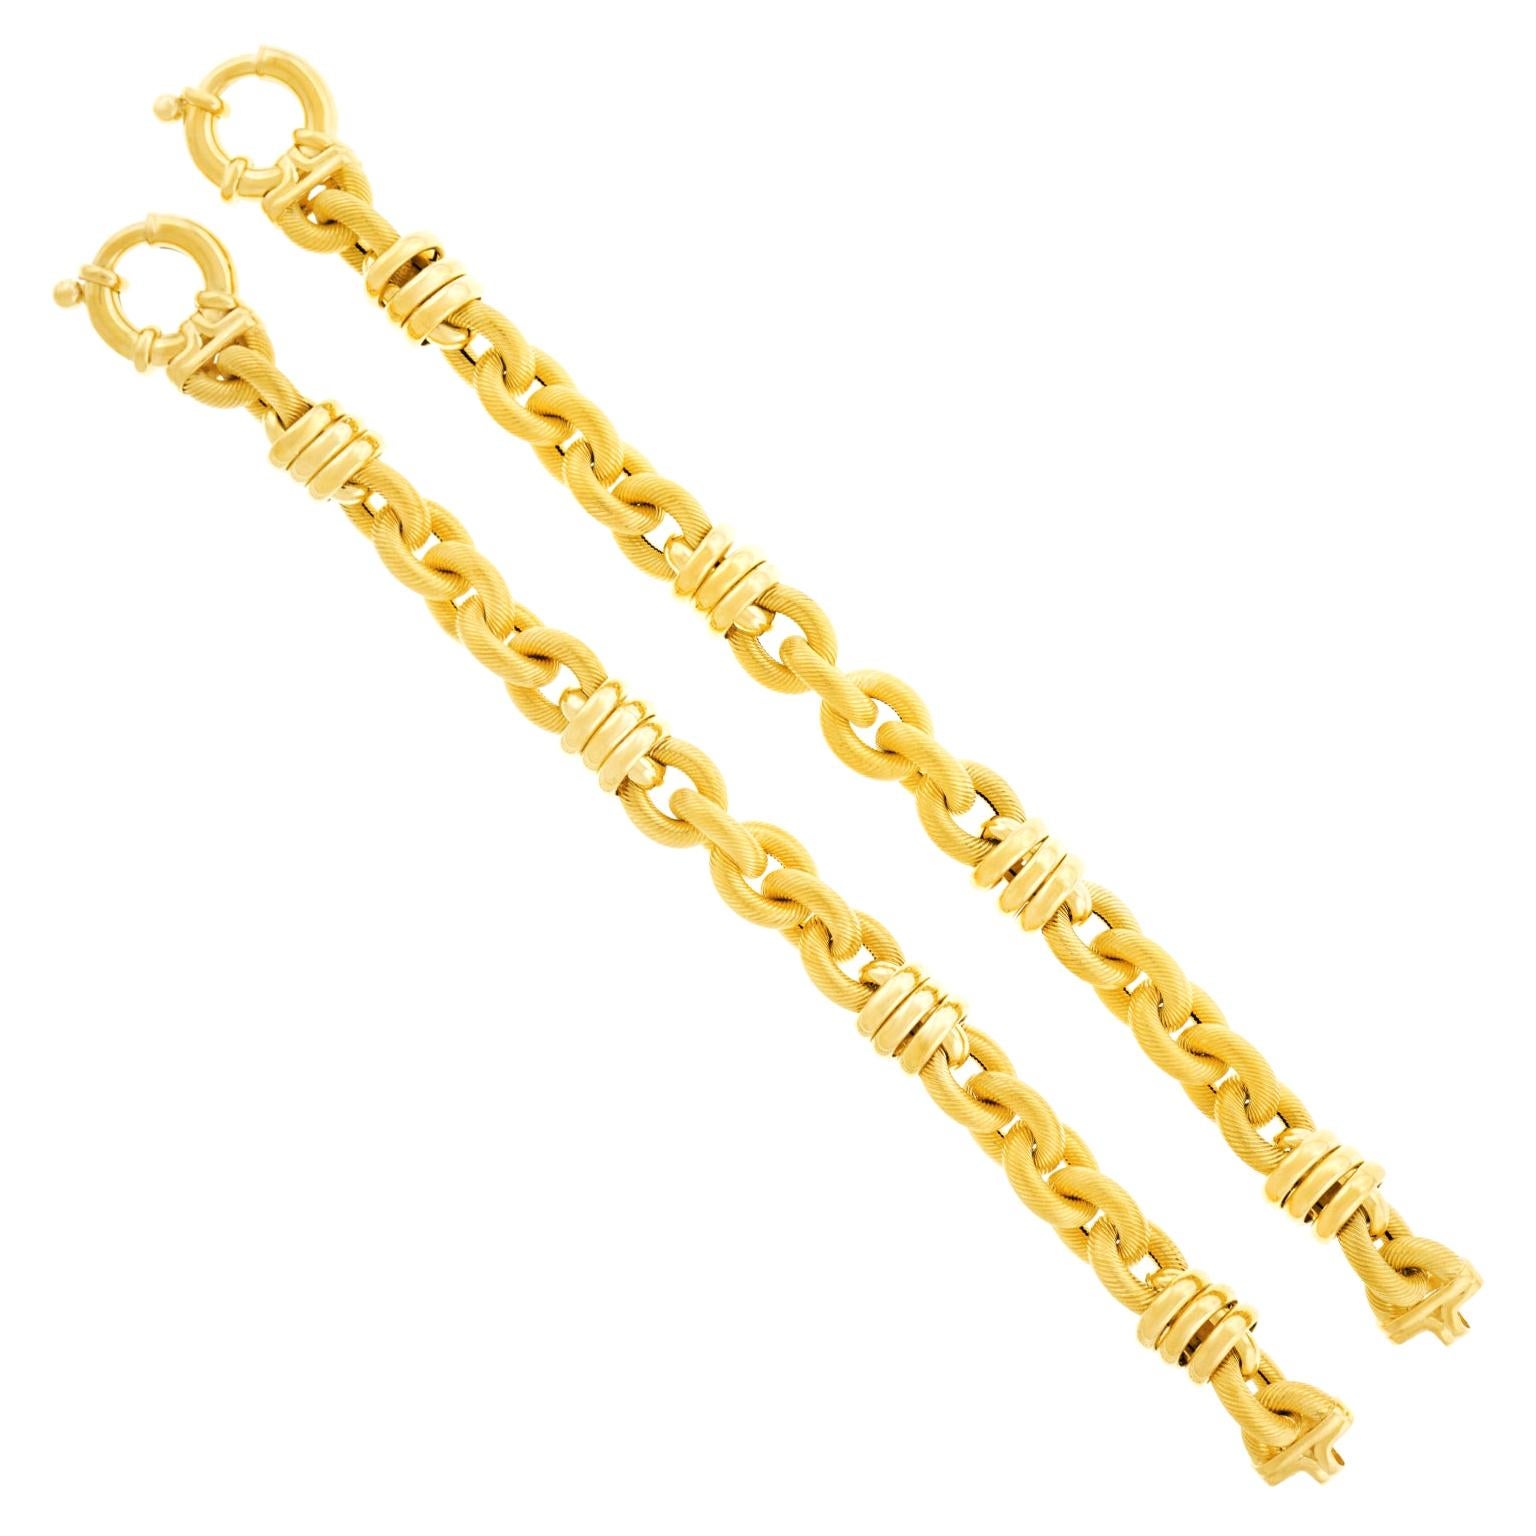 Pair of Italian 18 Karat Gold Bracelets